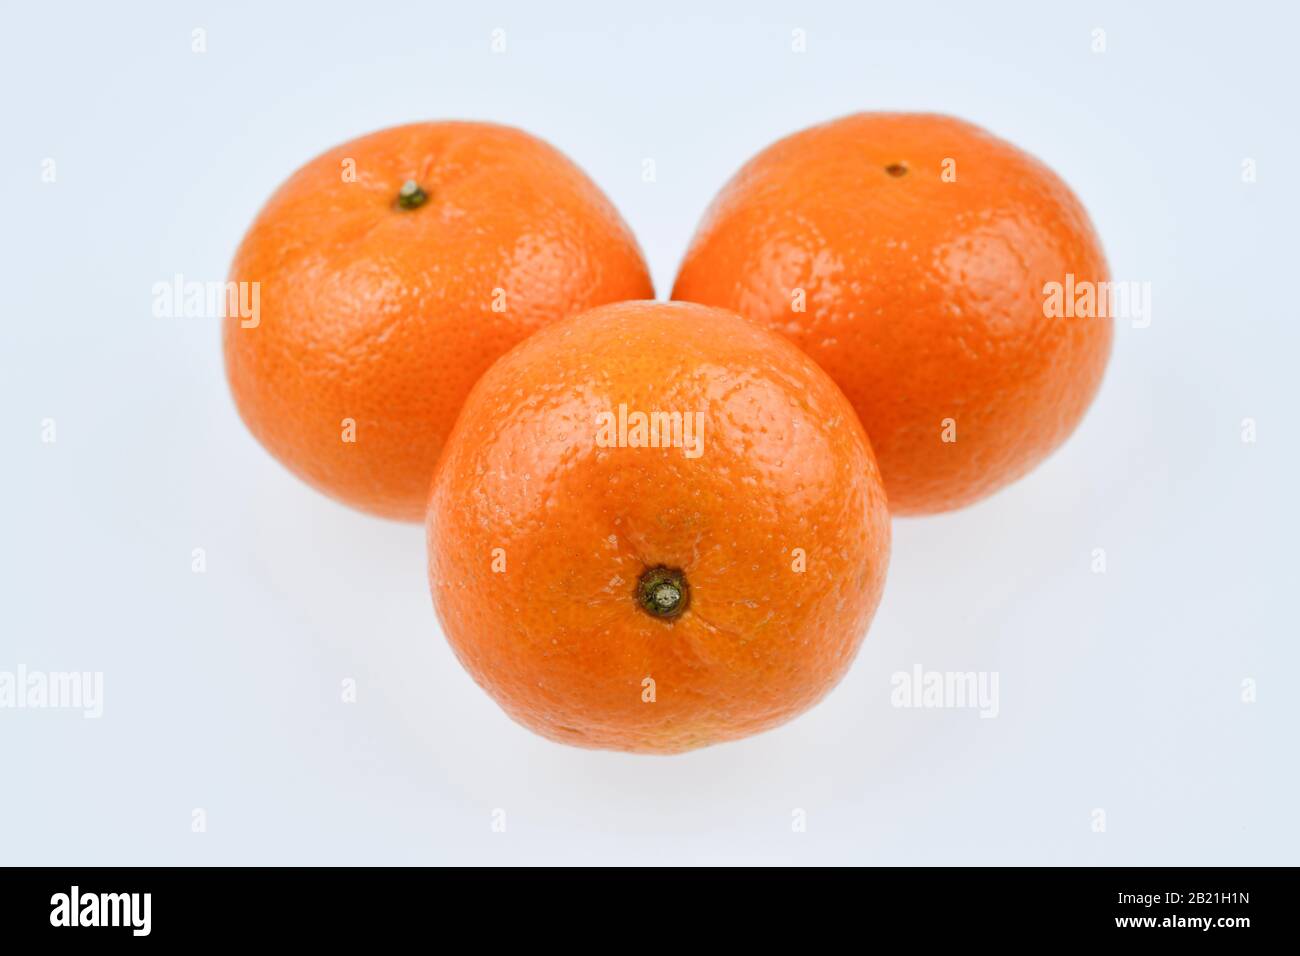 Mandarinen citrus reticulata hi-res stock photography and images - Alamy